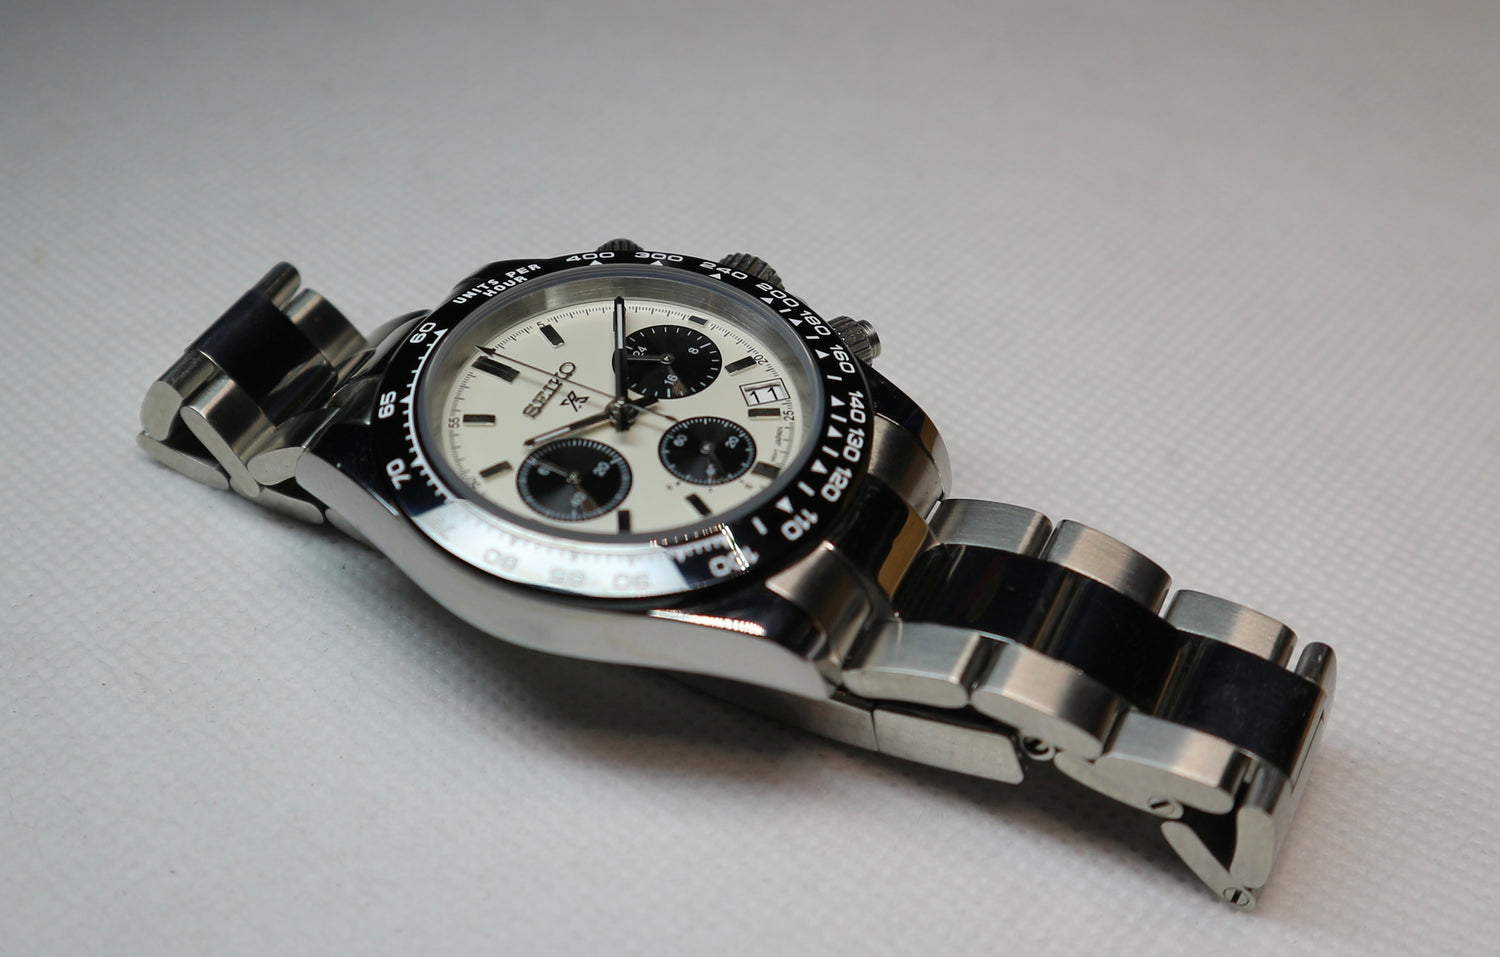 Montre Daytona seiko mod panda custom watch – Moddertimer